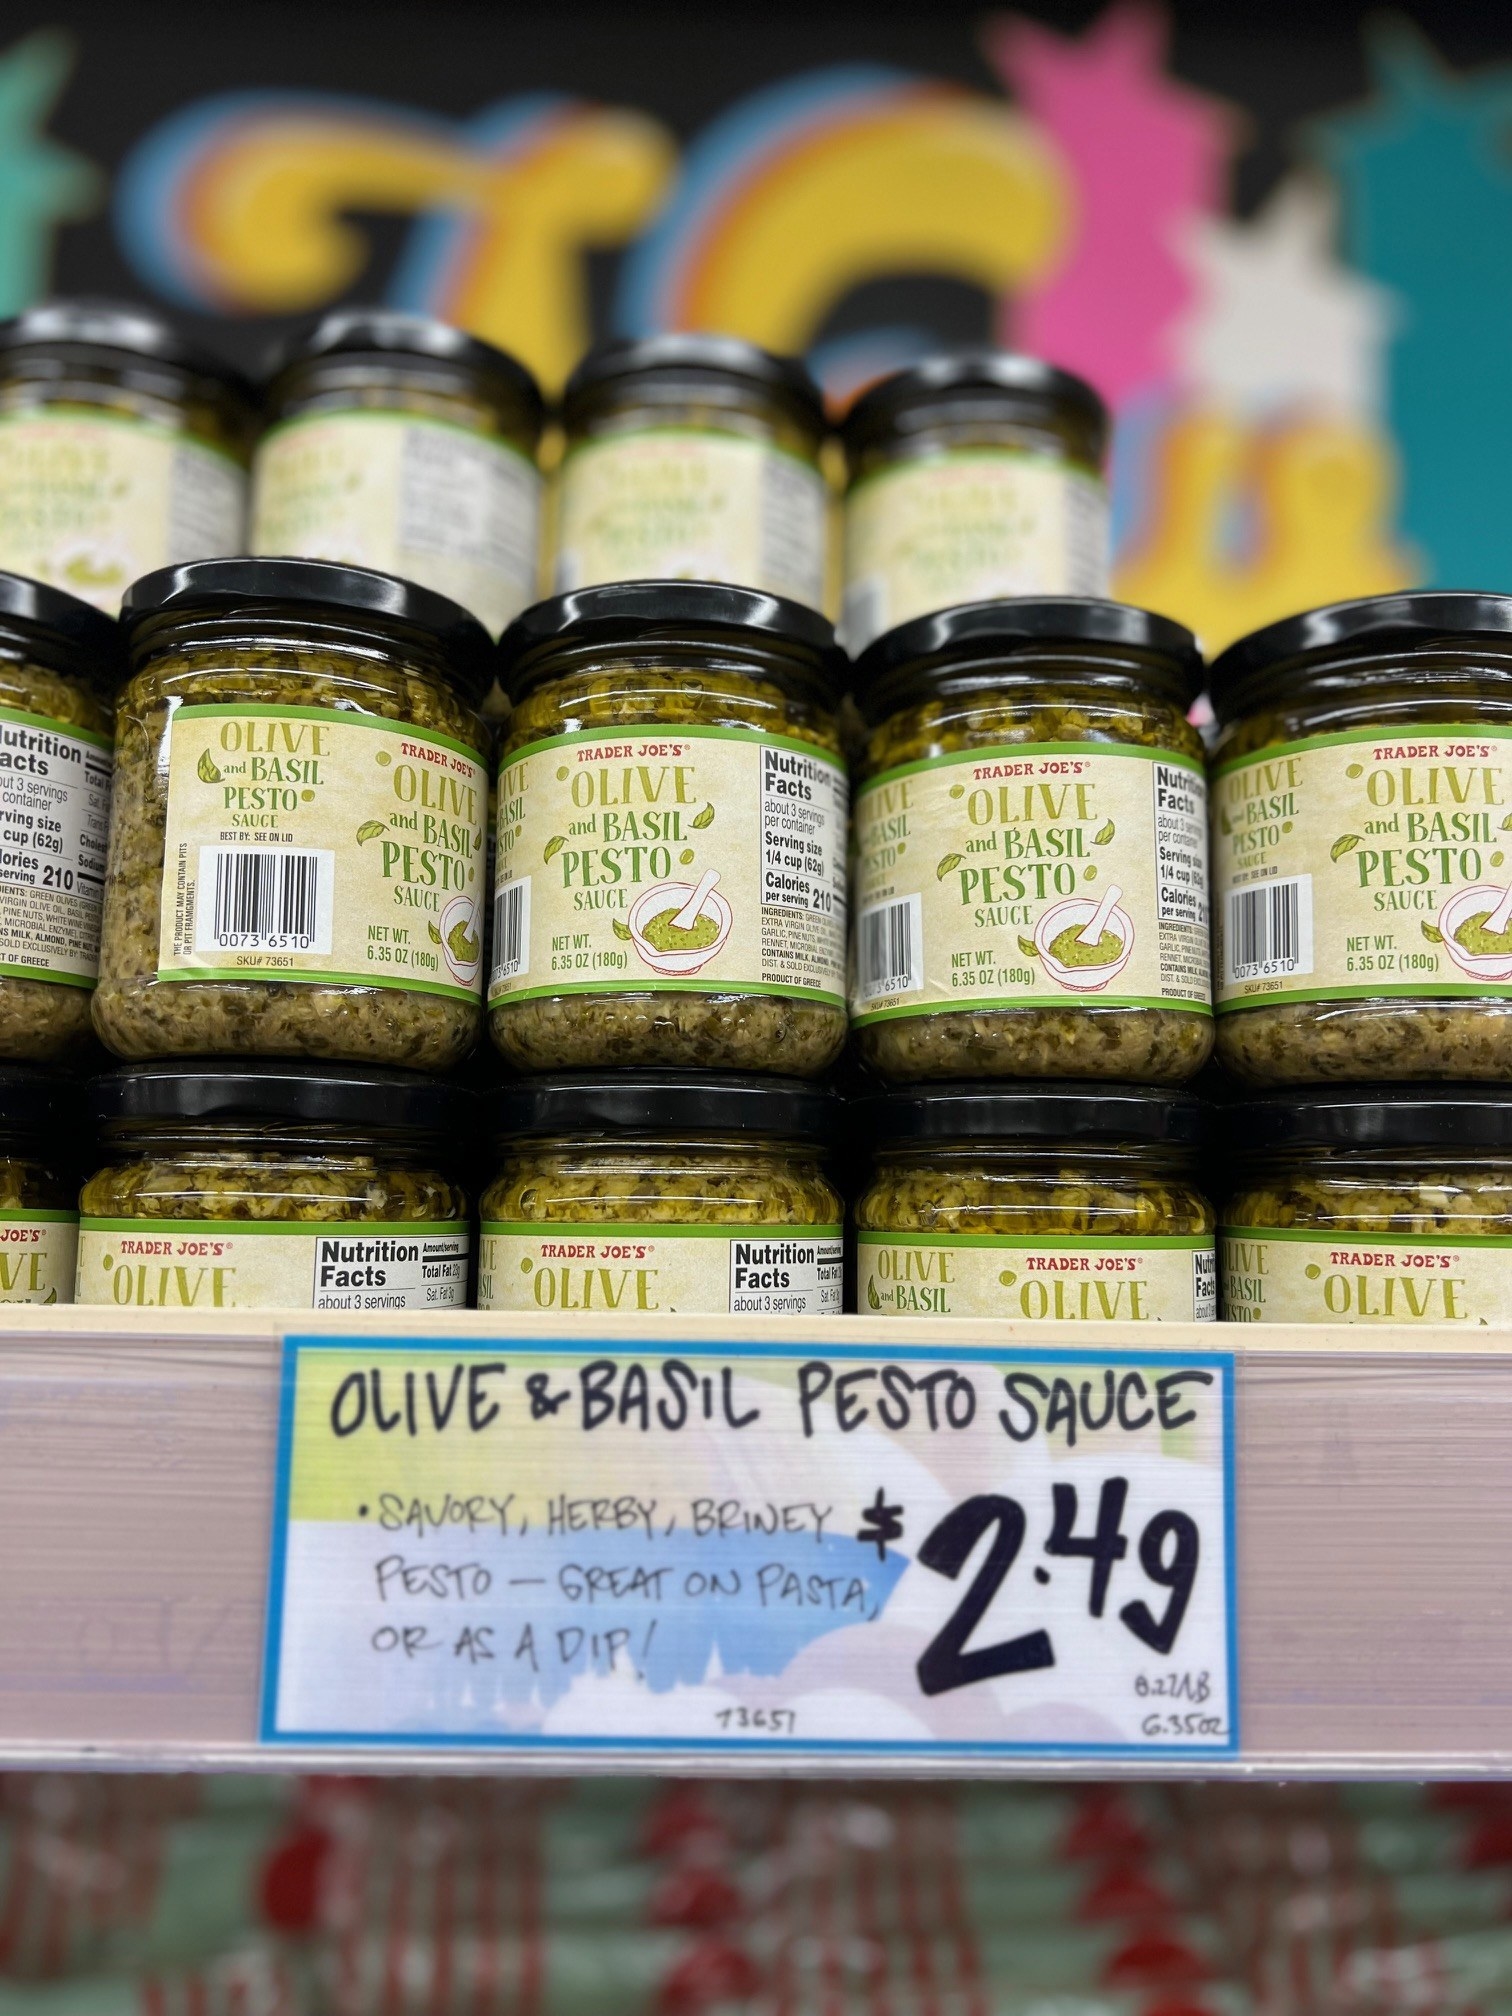 Many small jars of Olive and Basil Pesto Sauce on display